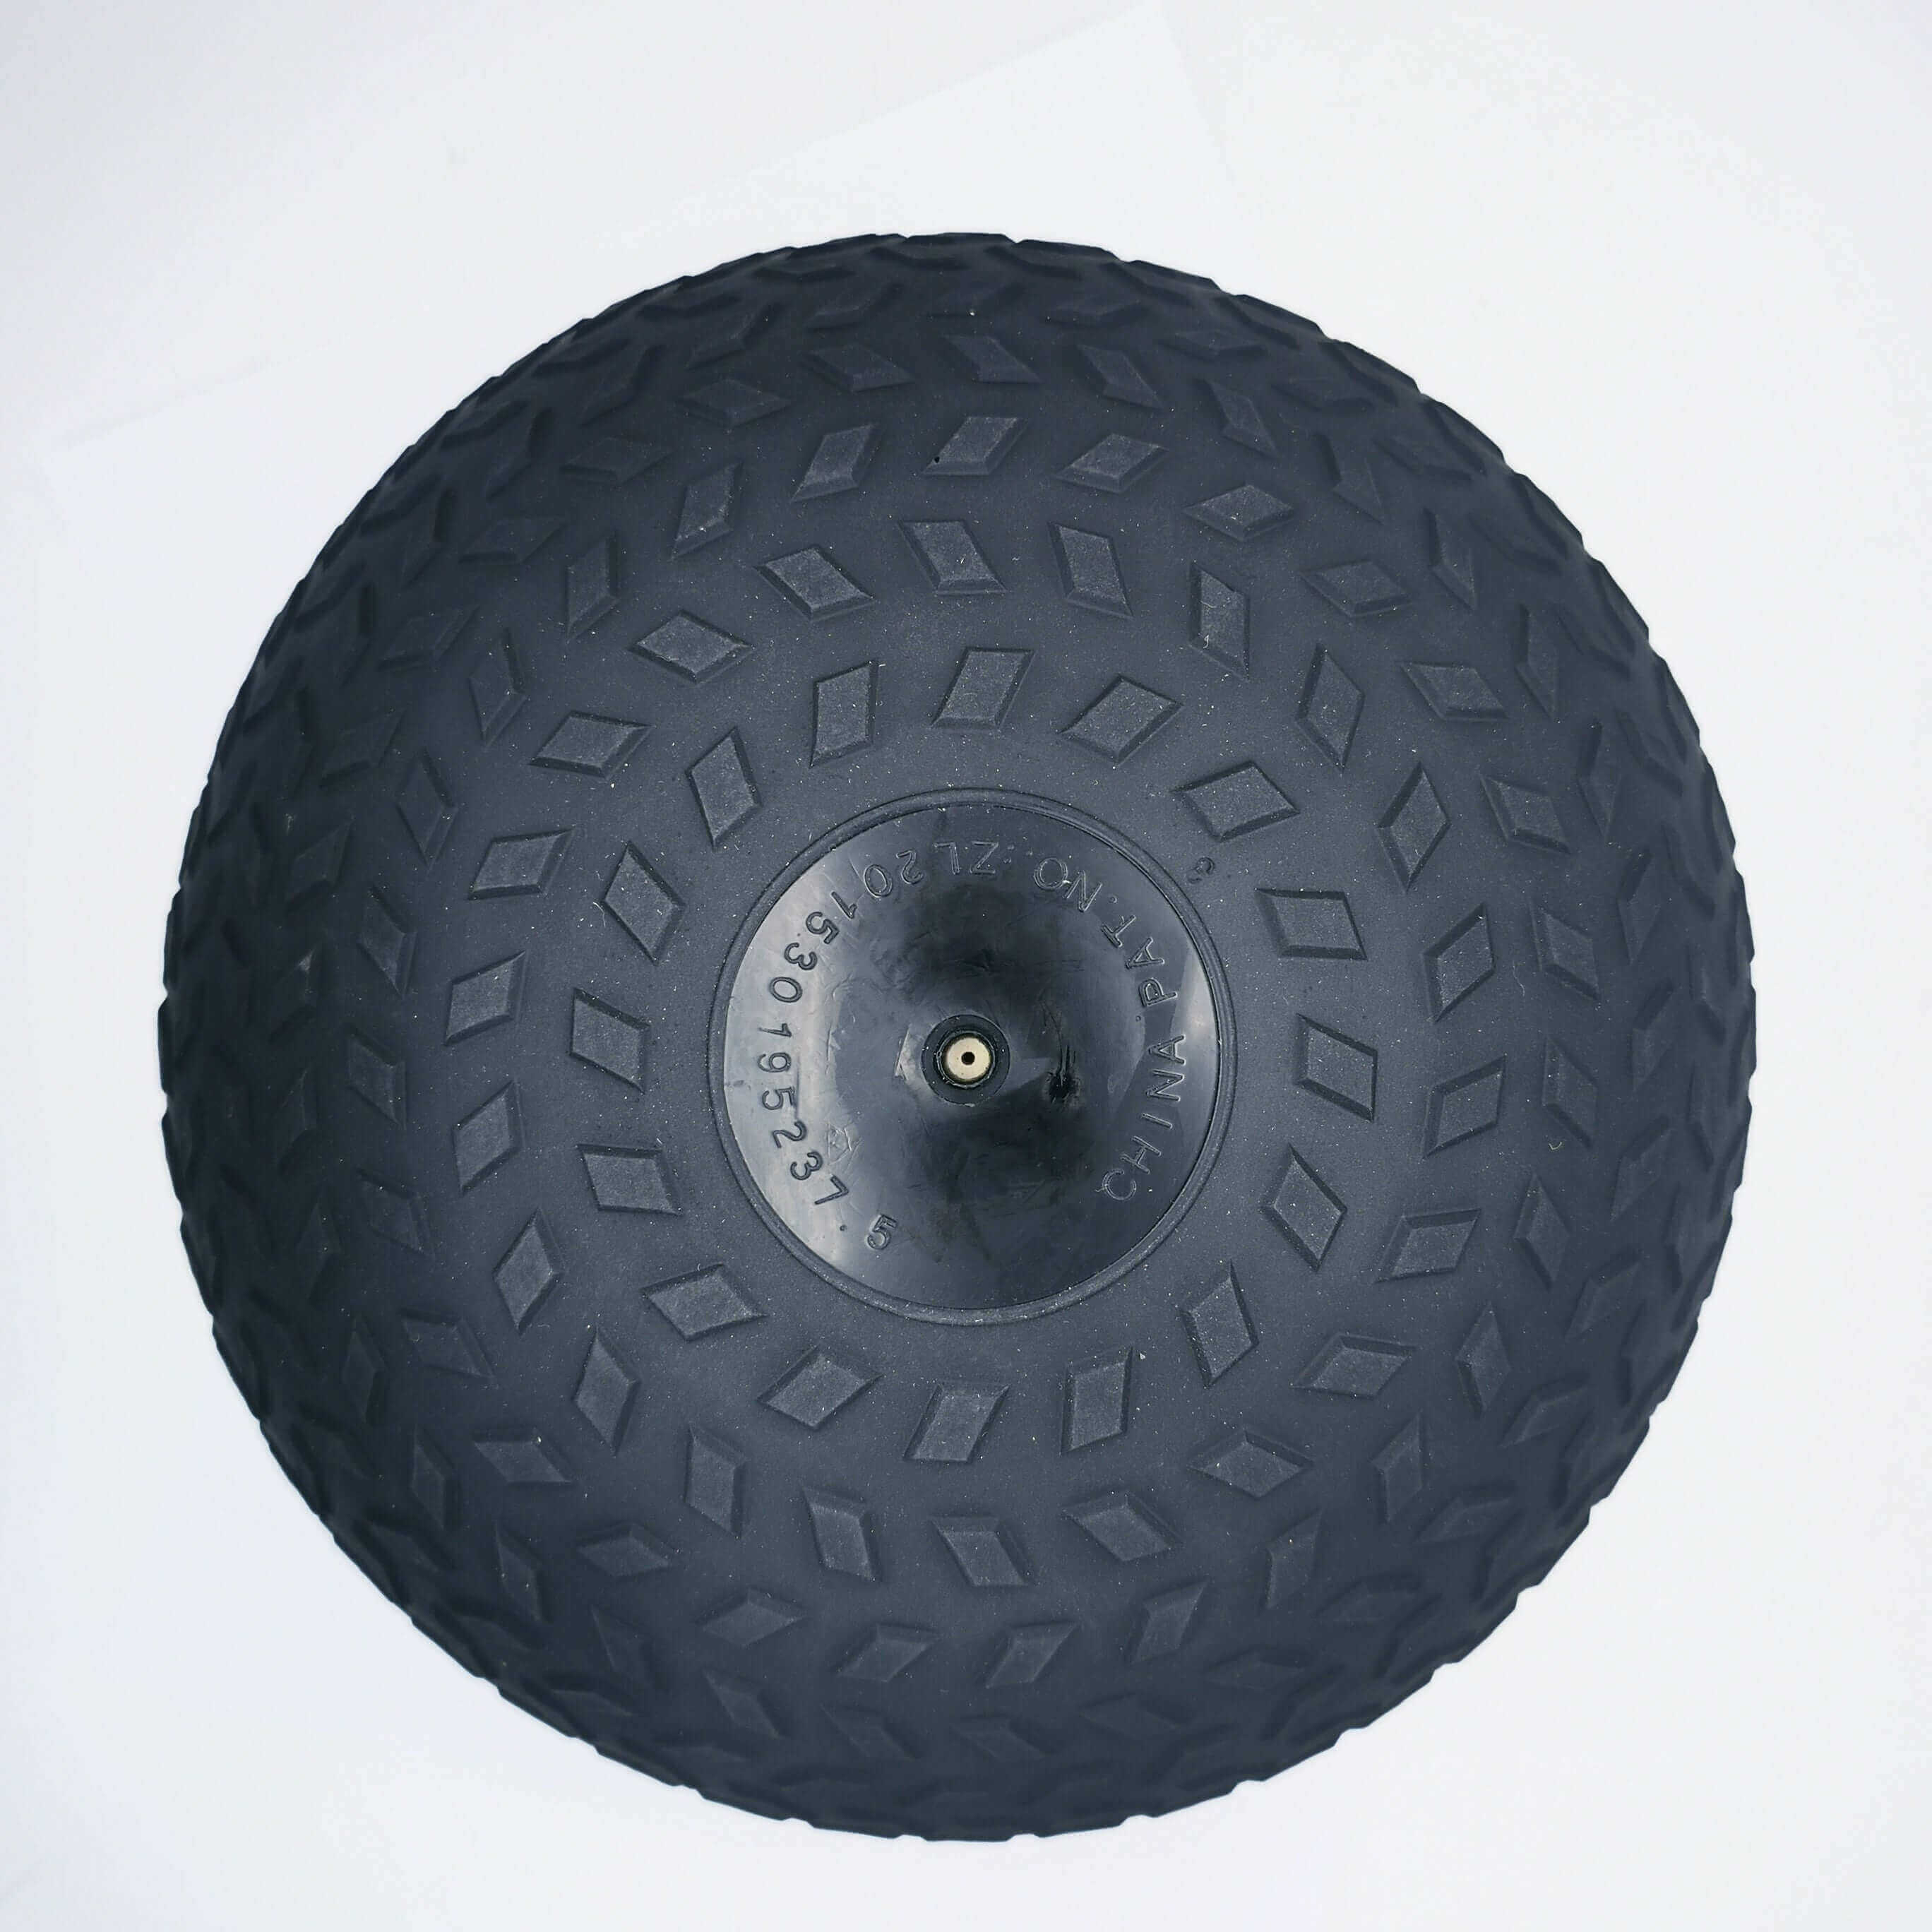 4kg Tyre Thread Slam Balls Fitness Exercise Sand Bag | INSOURCE